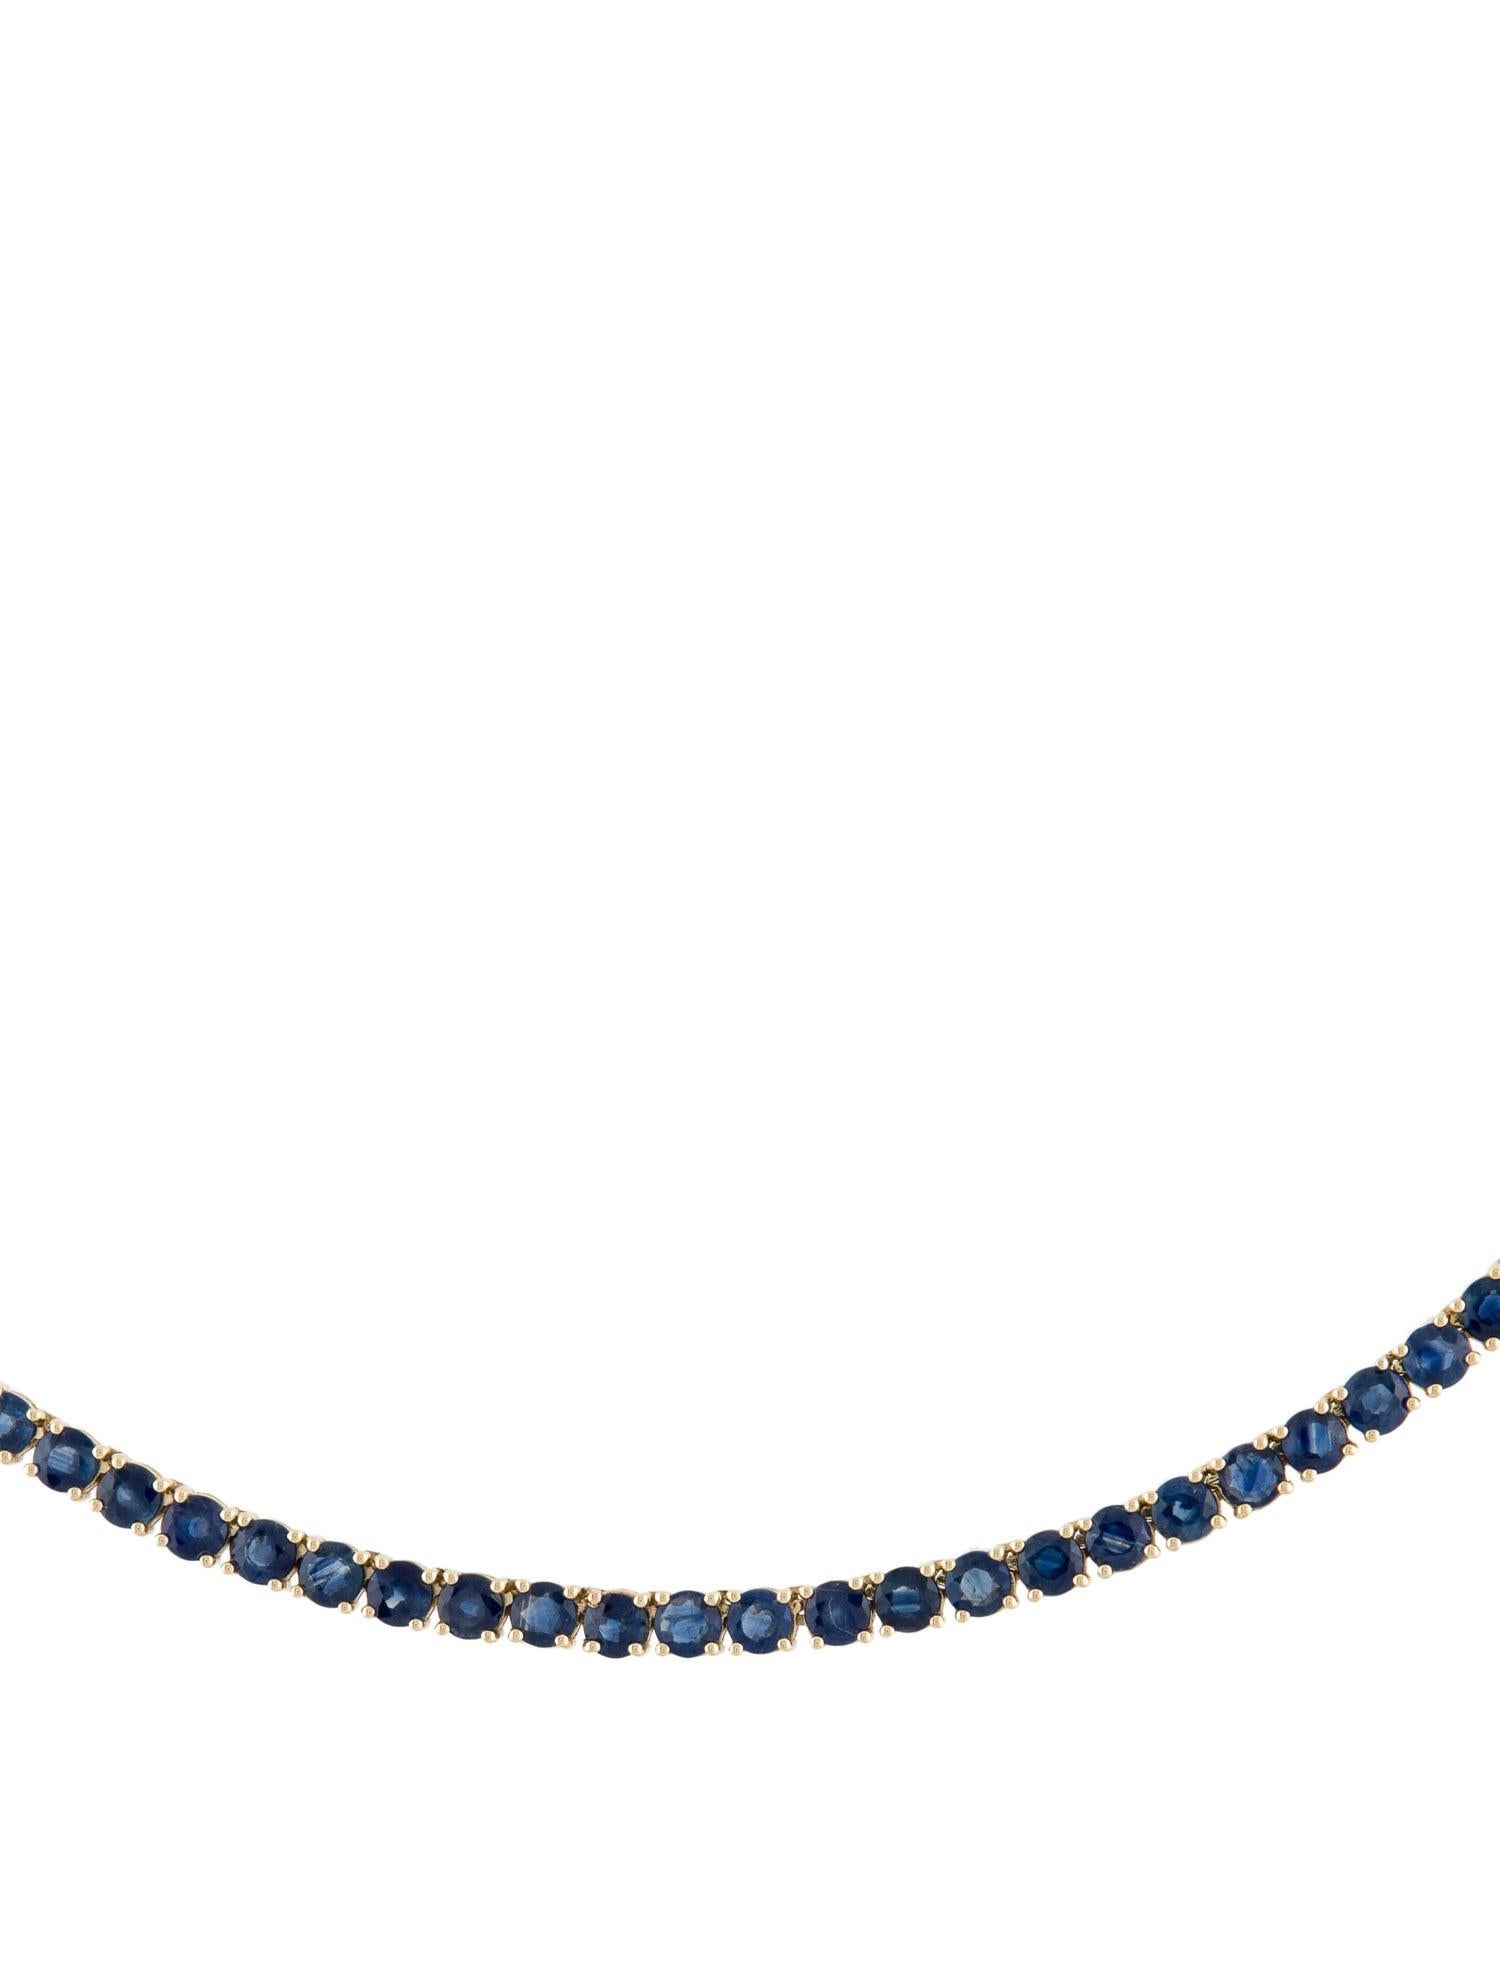 Women's 14K 10.20ctw Sapphire Station Necklace - Exquisite Gemstone Statement Piece For Sale